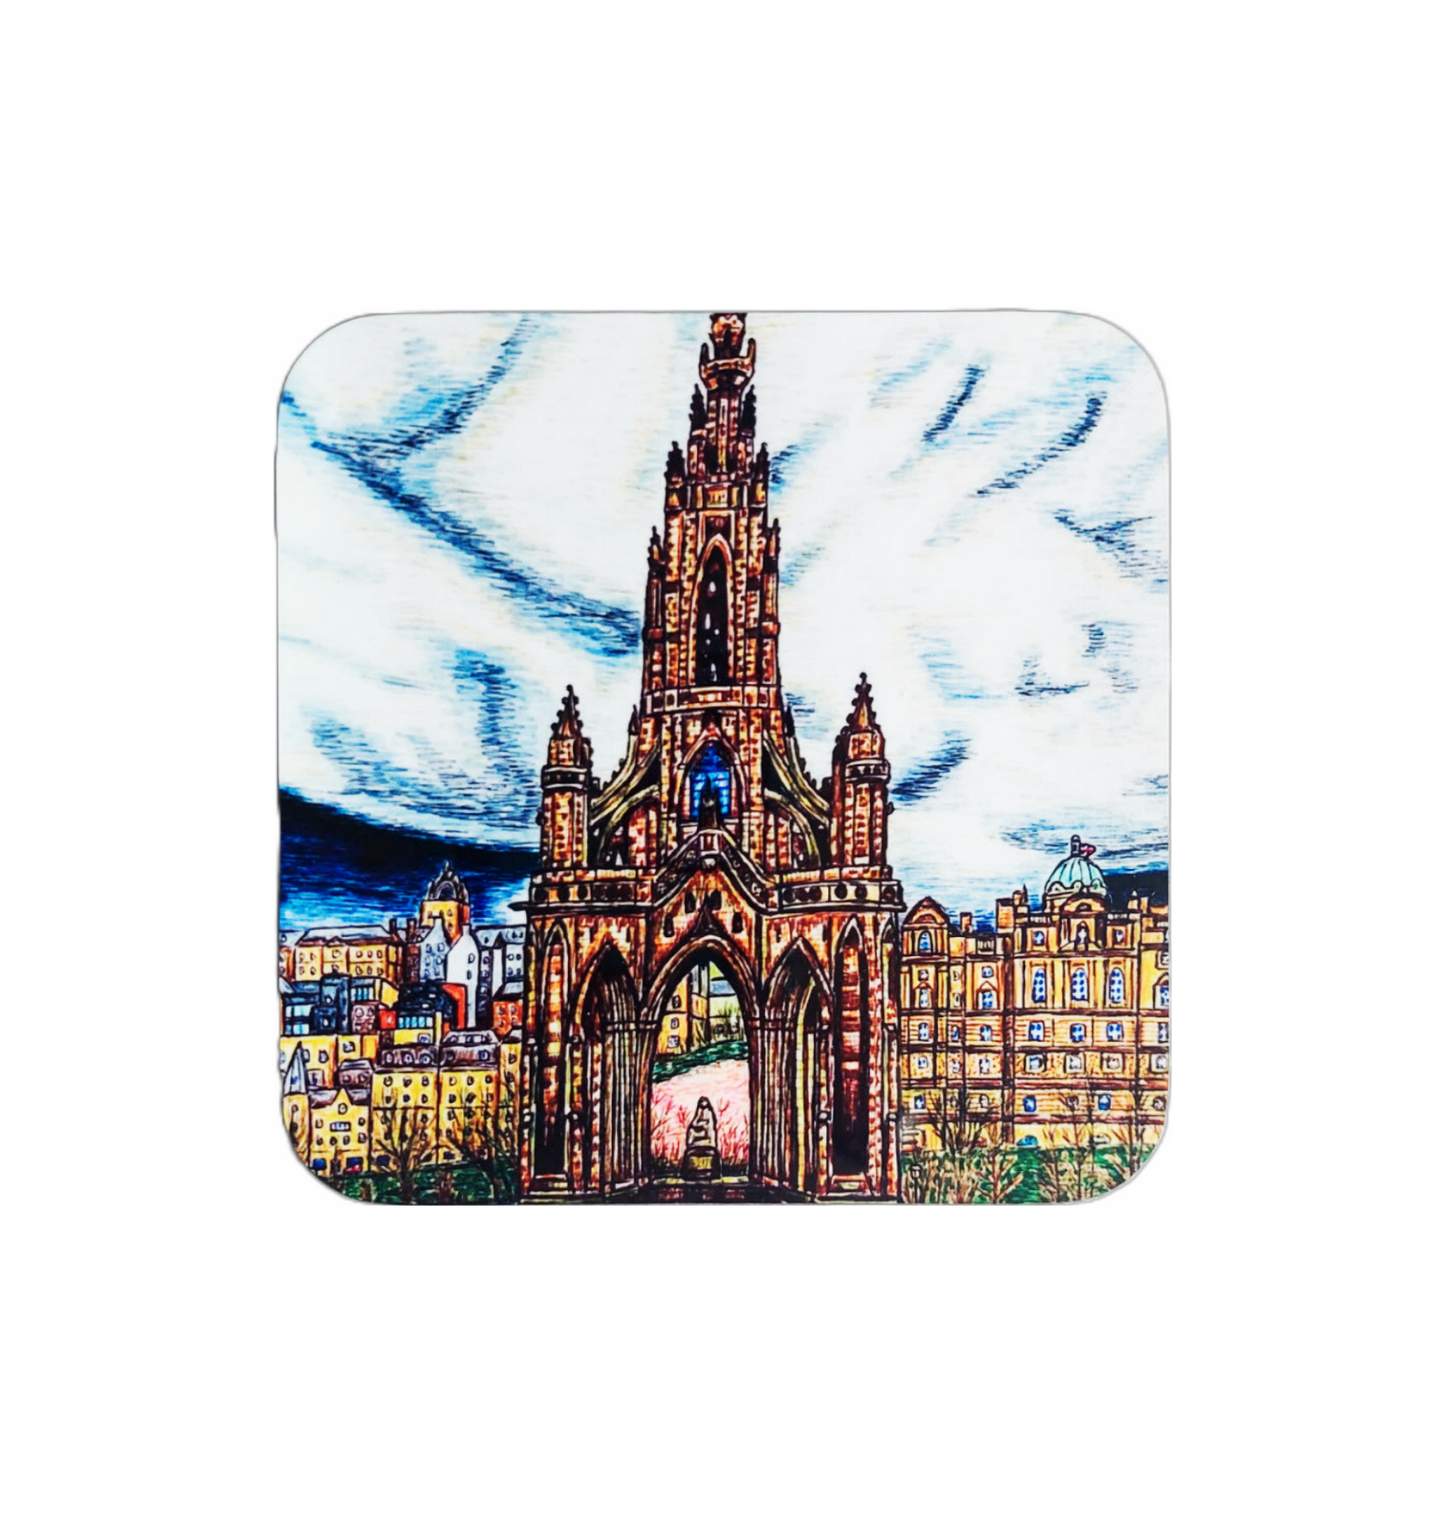 Hand-crafted Edinburgh Coasters